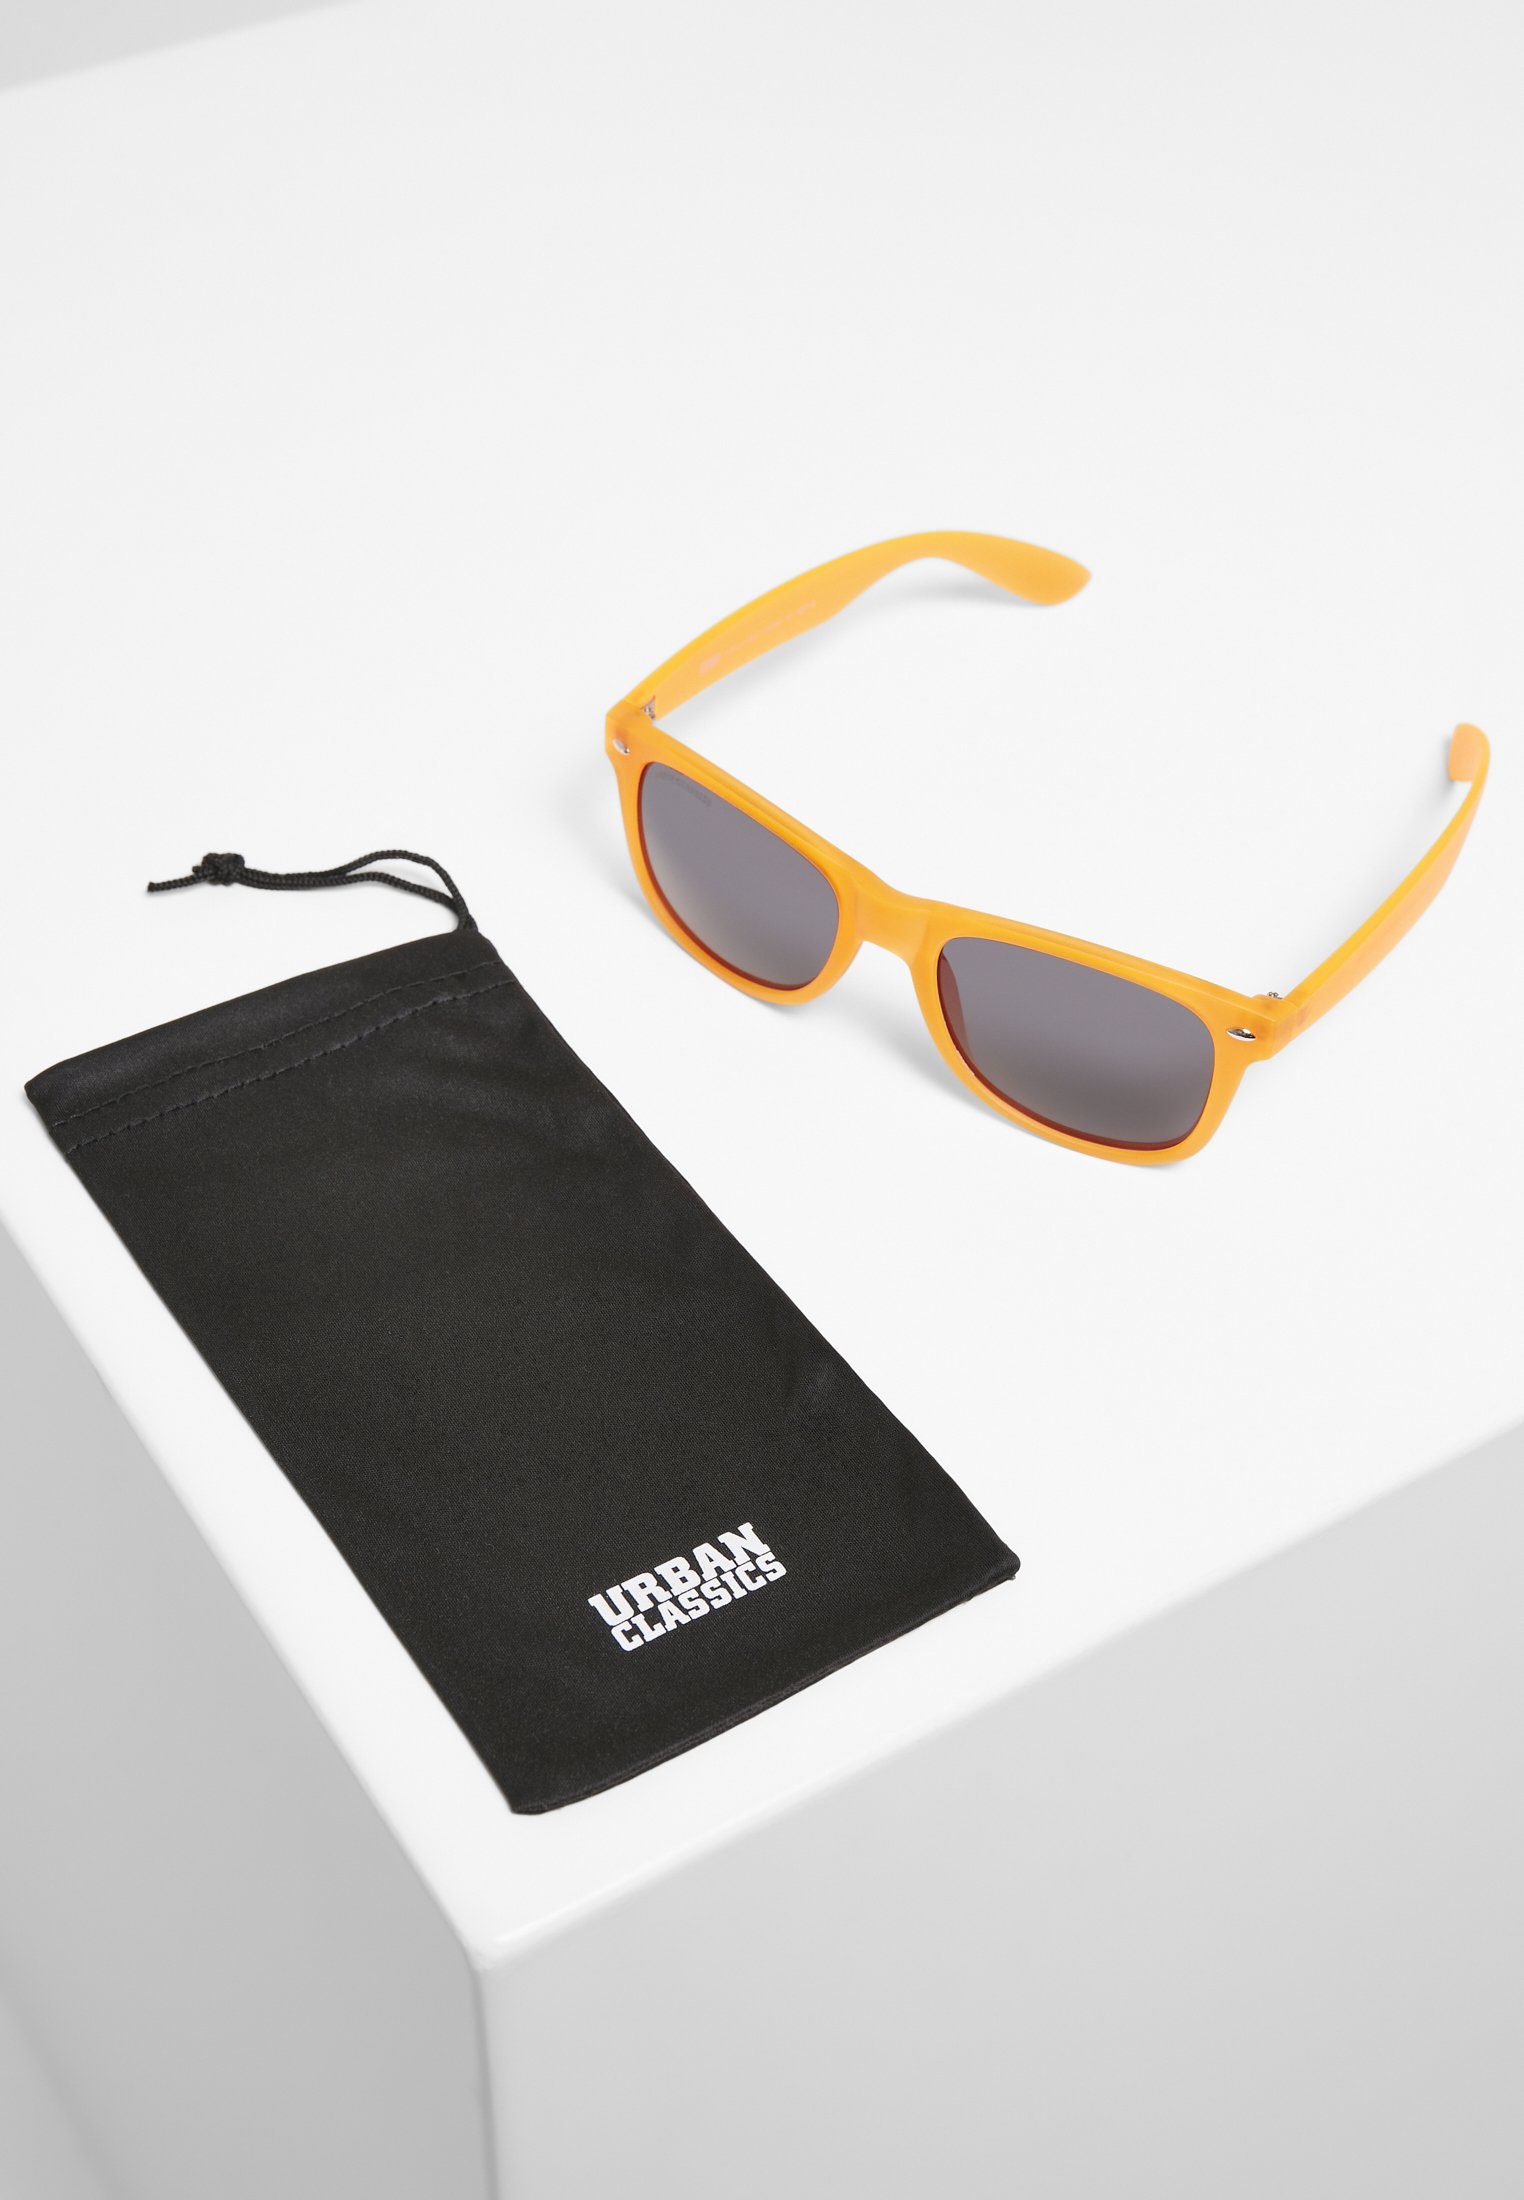 Sunglasses URBAN neonorange Likoma CLASSICS Sonnenbrille UC Accessoires